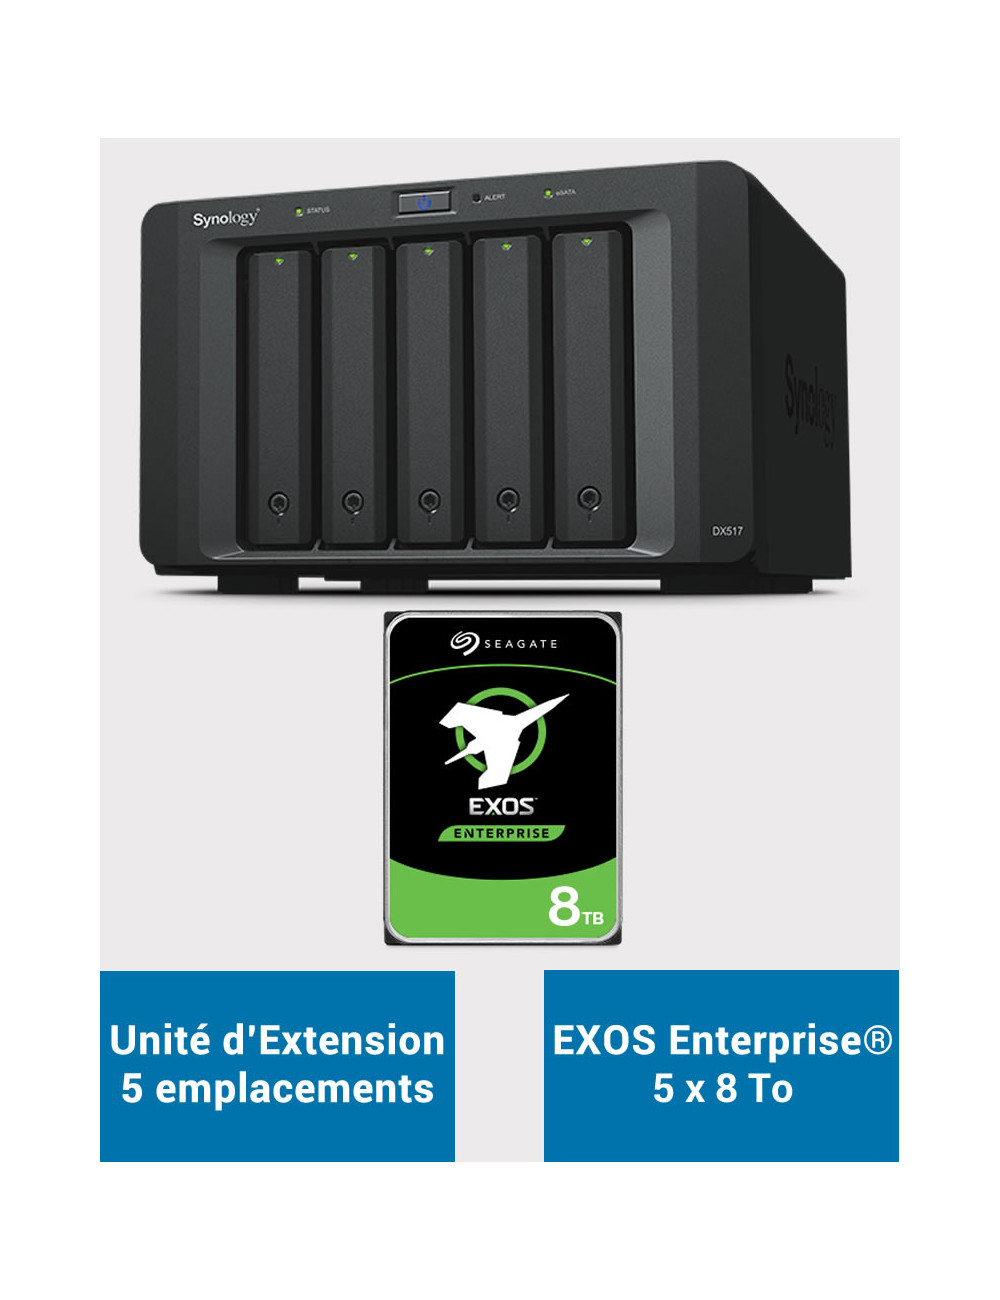 Synology DX517 Expansion Unit EXOS Enterprise 40TB (5x8TB)